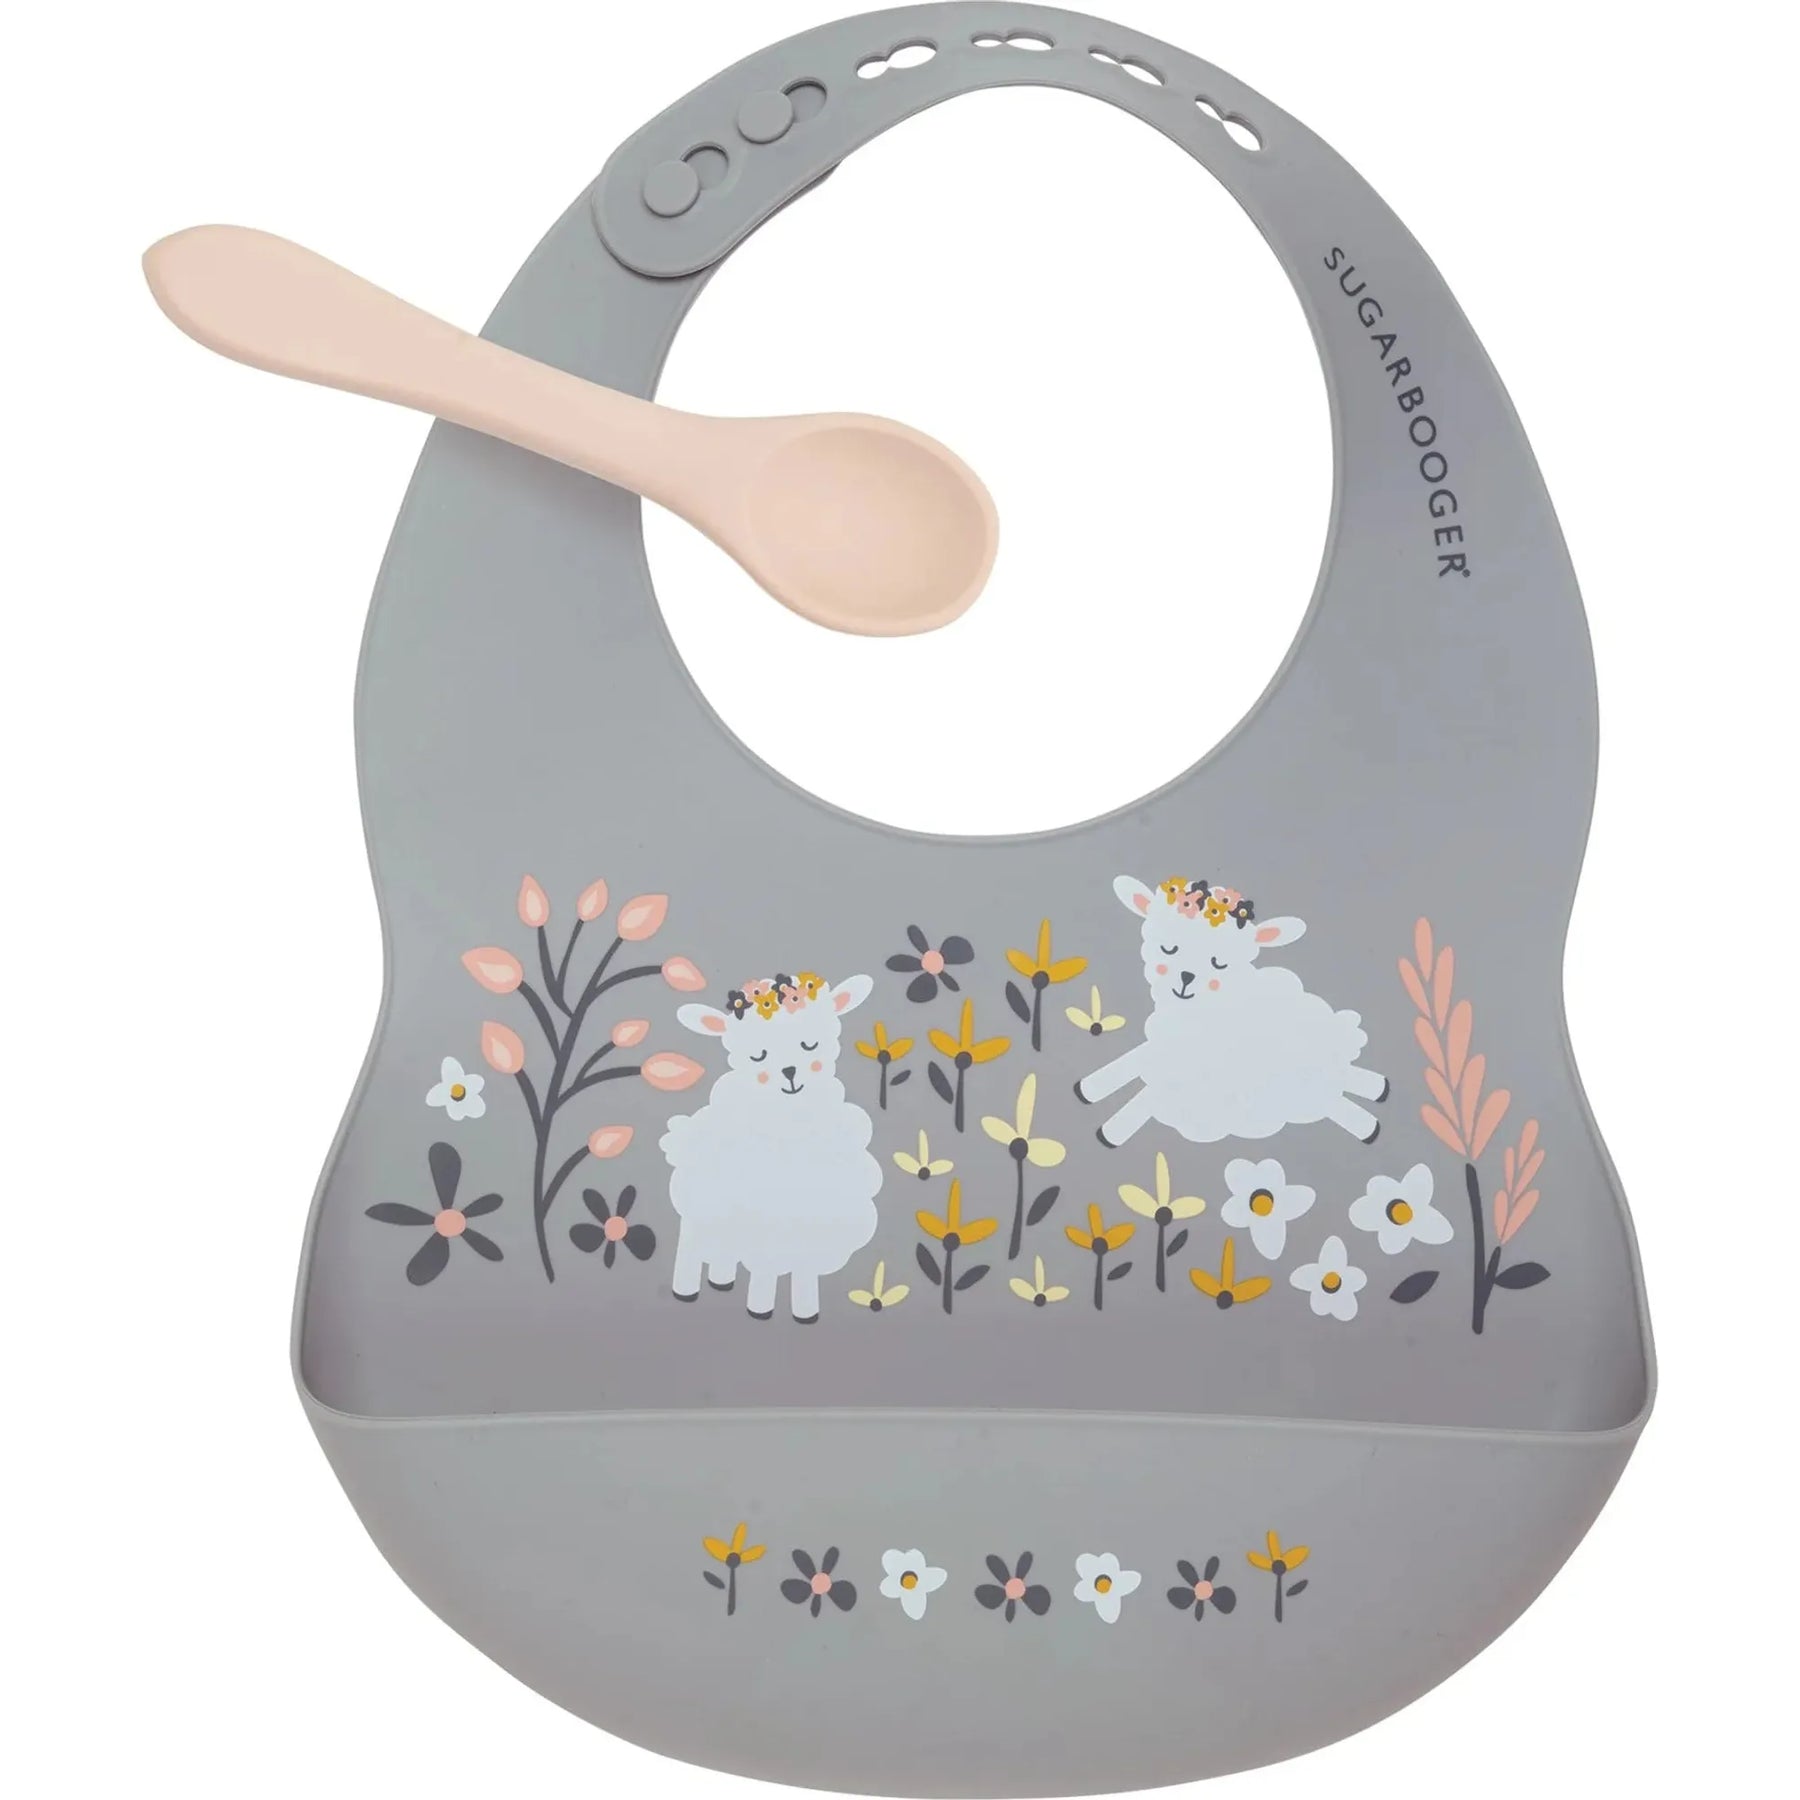 Lovely Minime Baby Feeding Set, Silicone Plates Bibs Spoons, Led